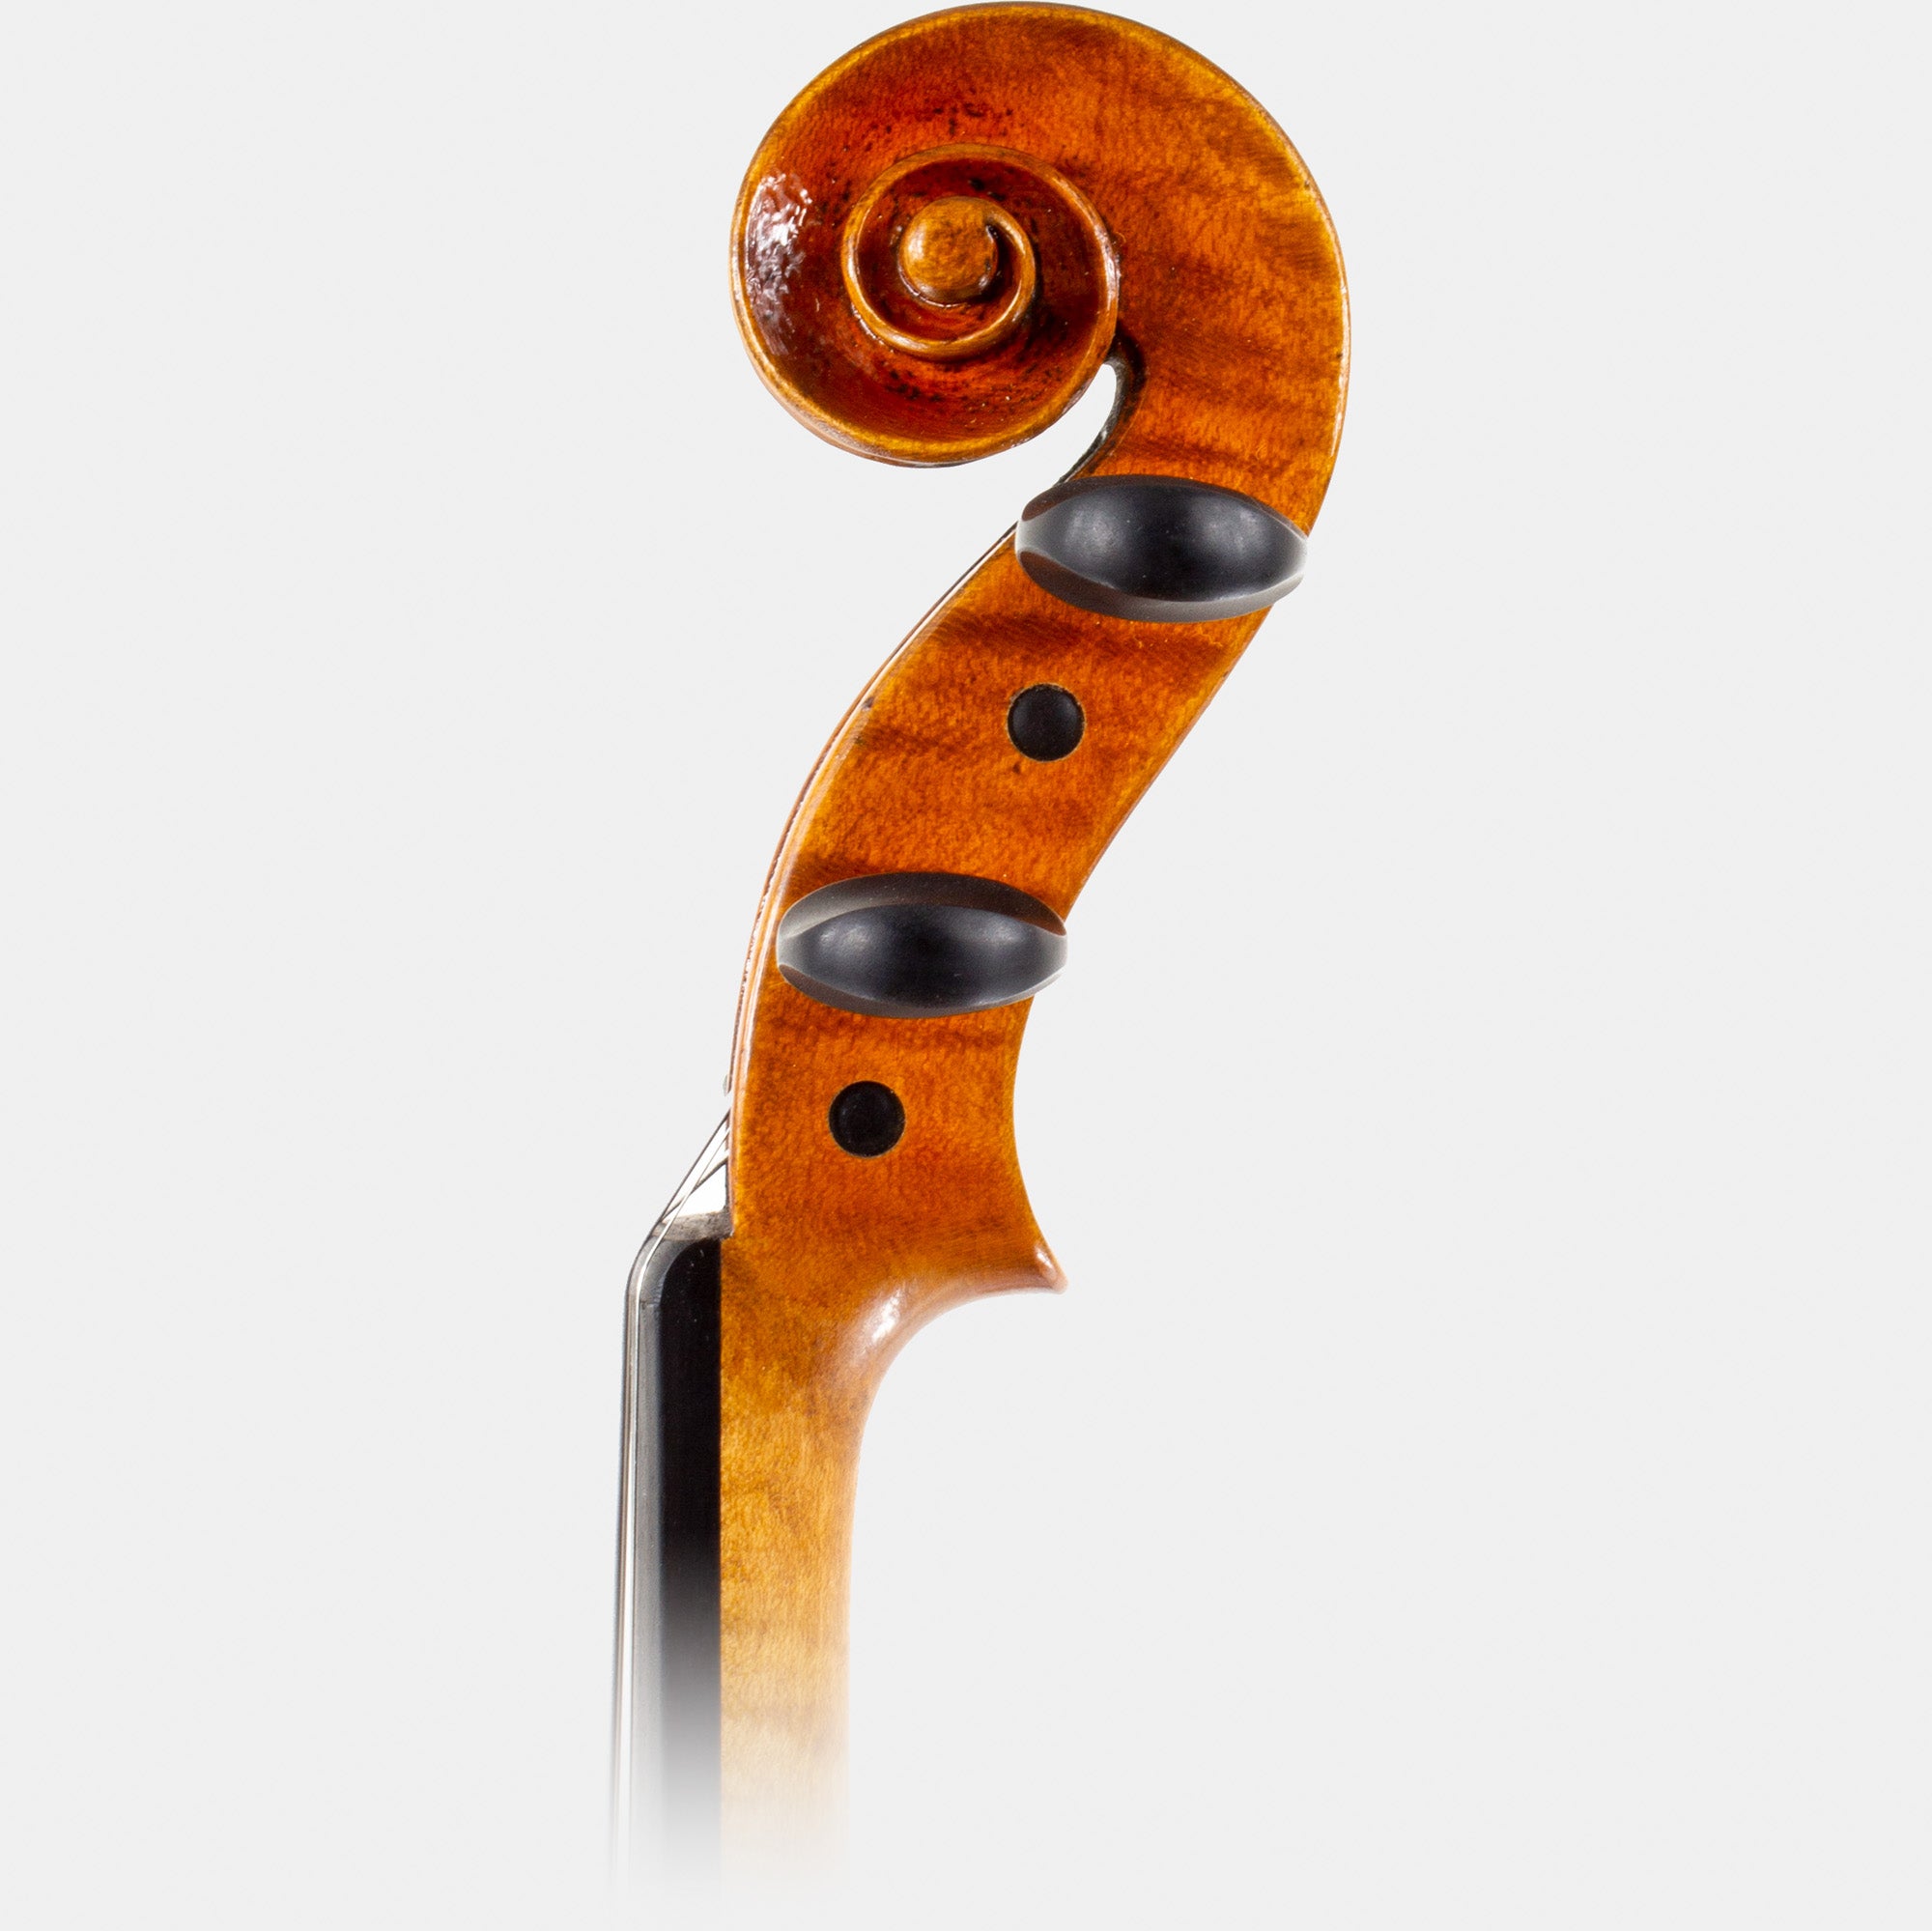 Deluxe Violin